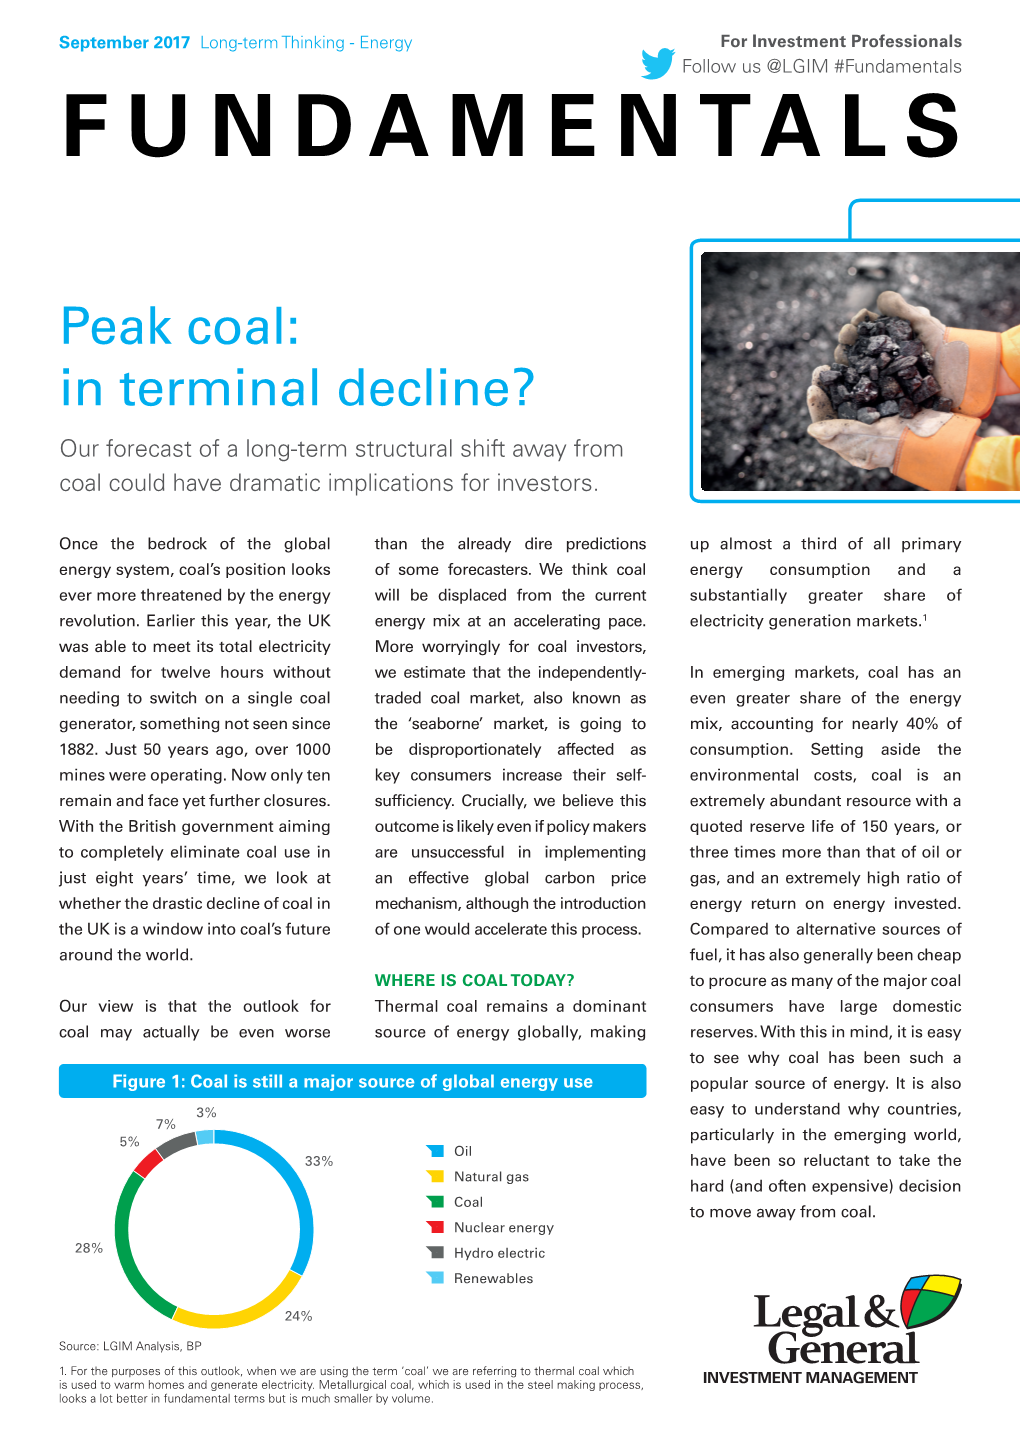 Peak Coal in Terminal Decline?